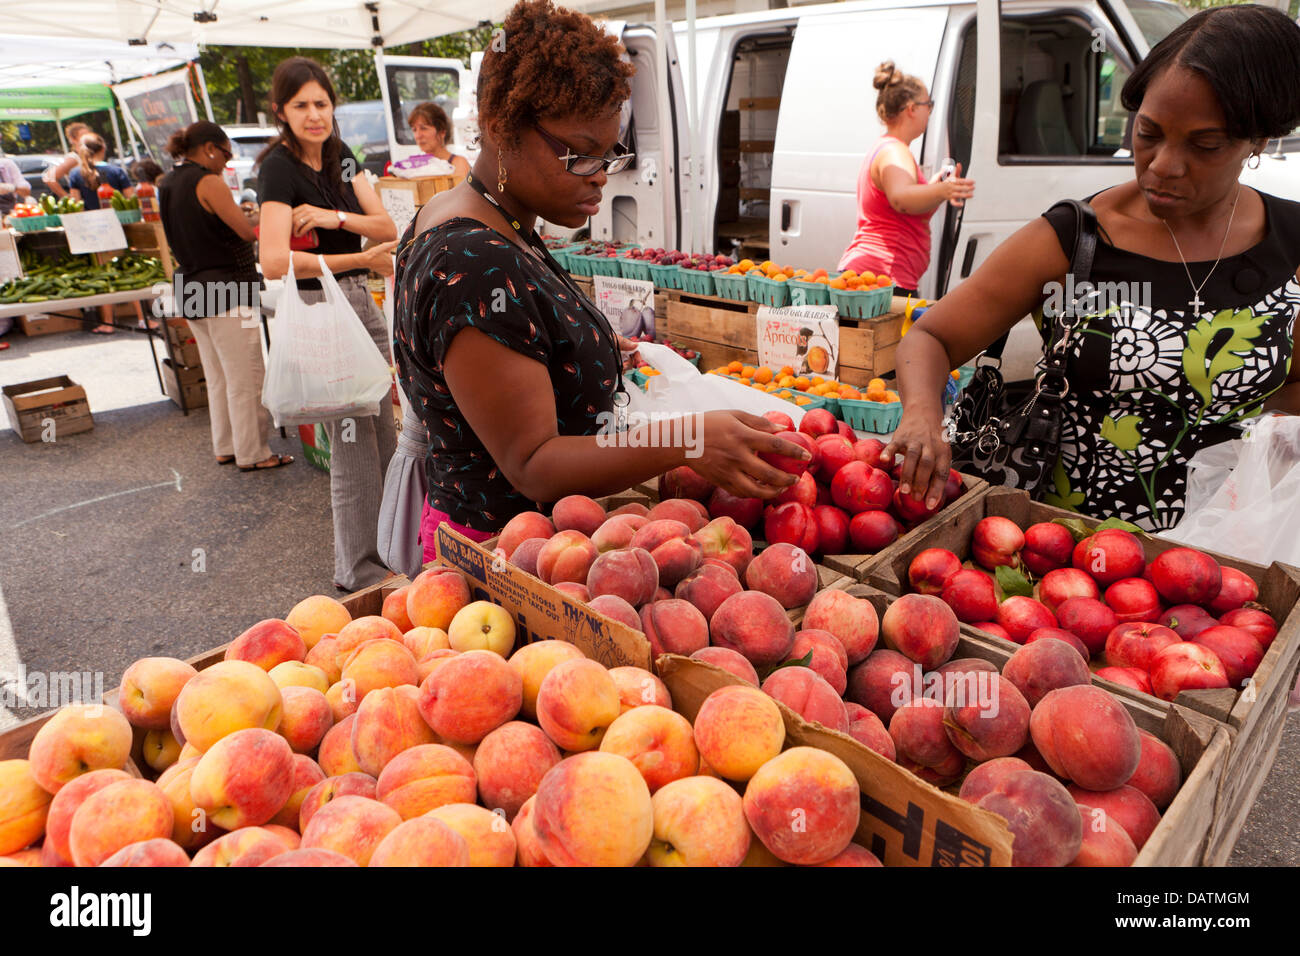 Women buying fruits at farmers market - Washington, DC USA Stock Photo